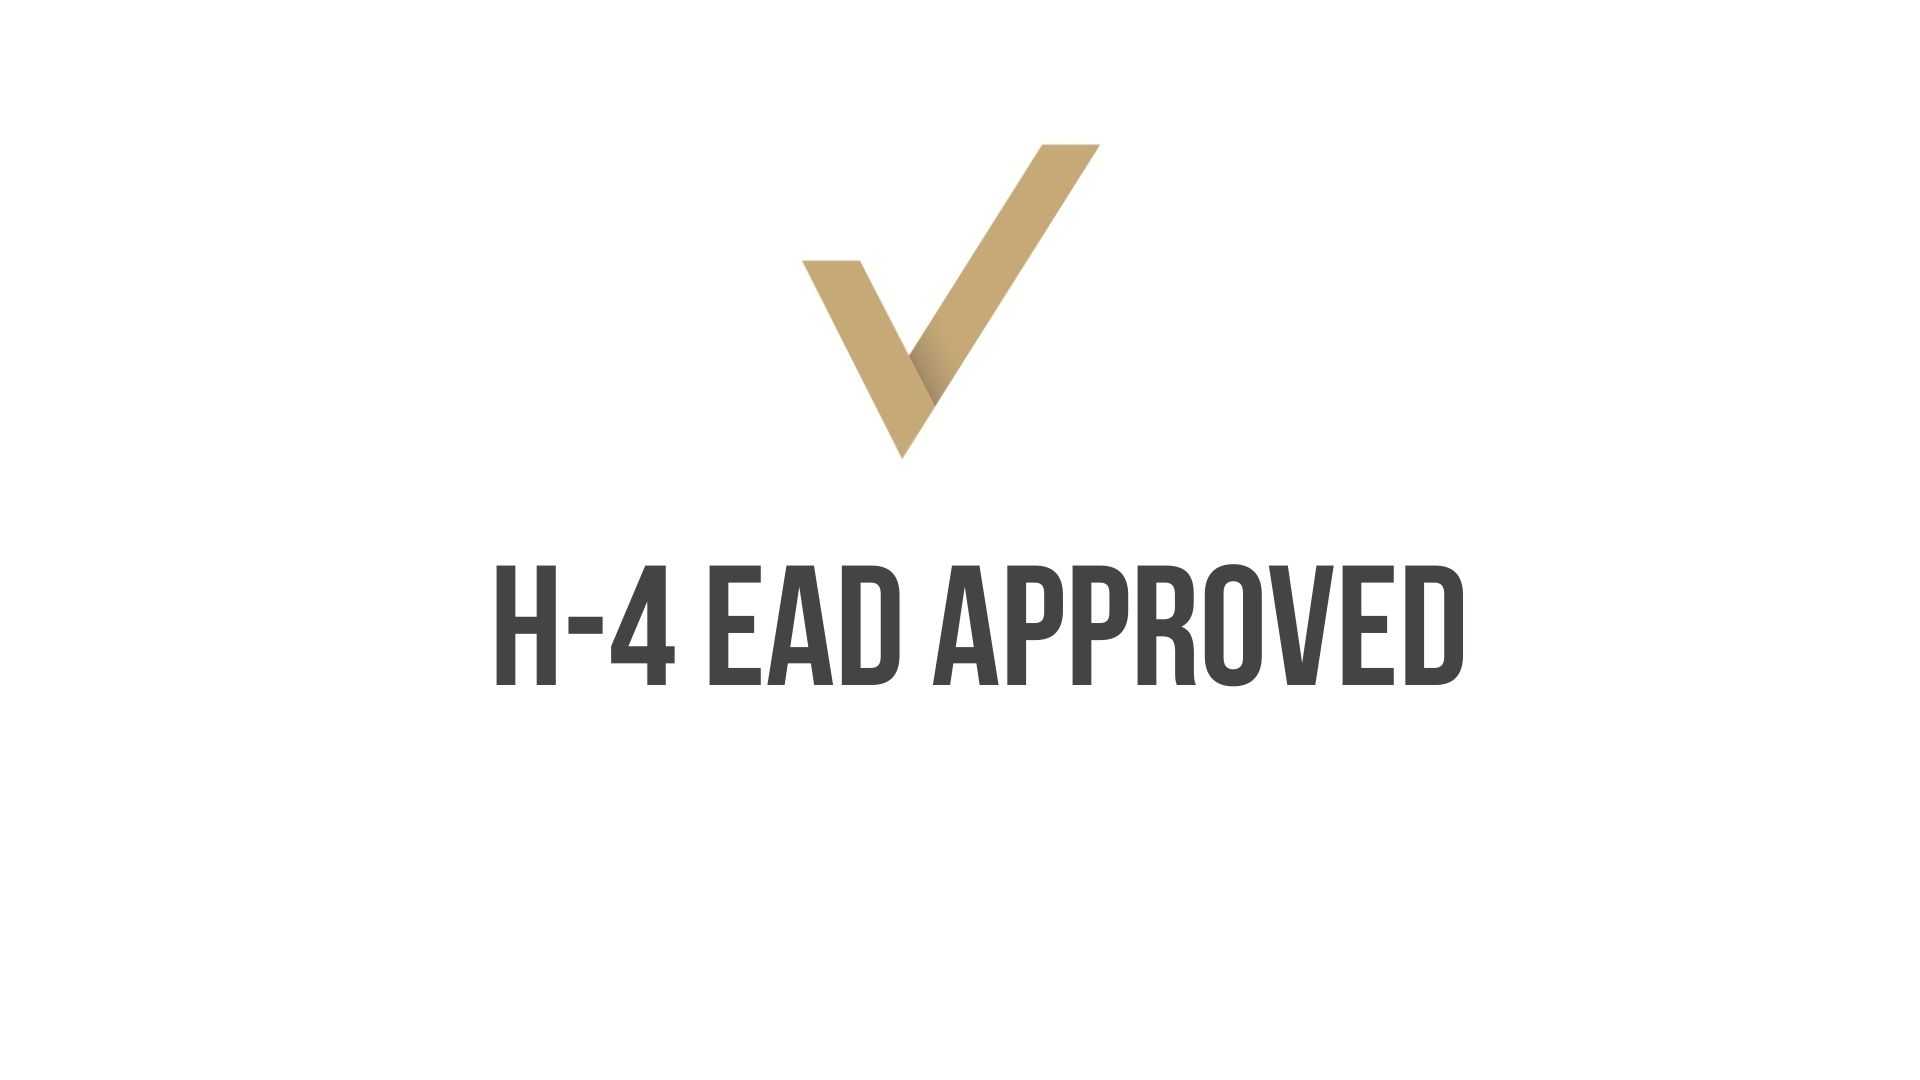 EAD Approval for H-4 Visa Holder in New York